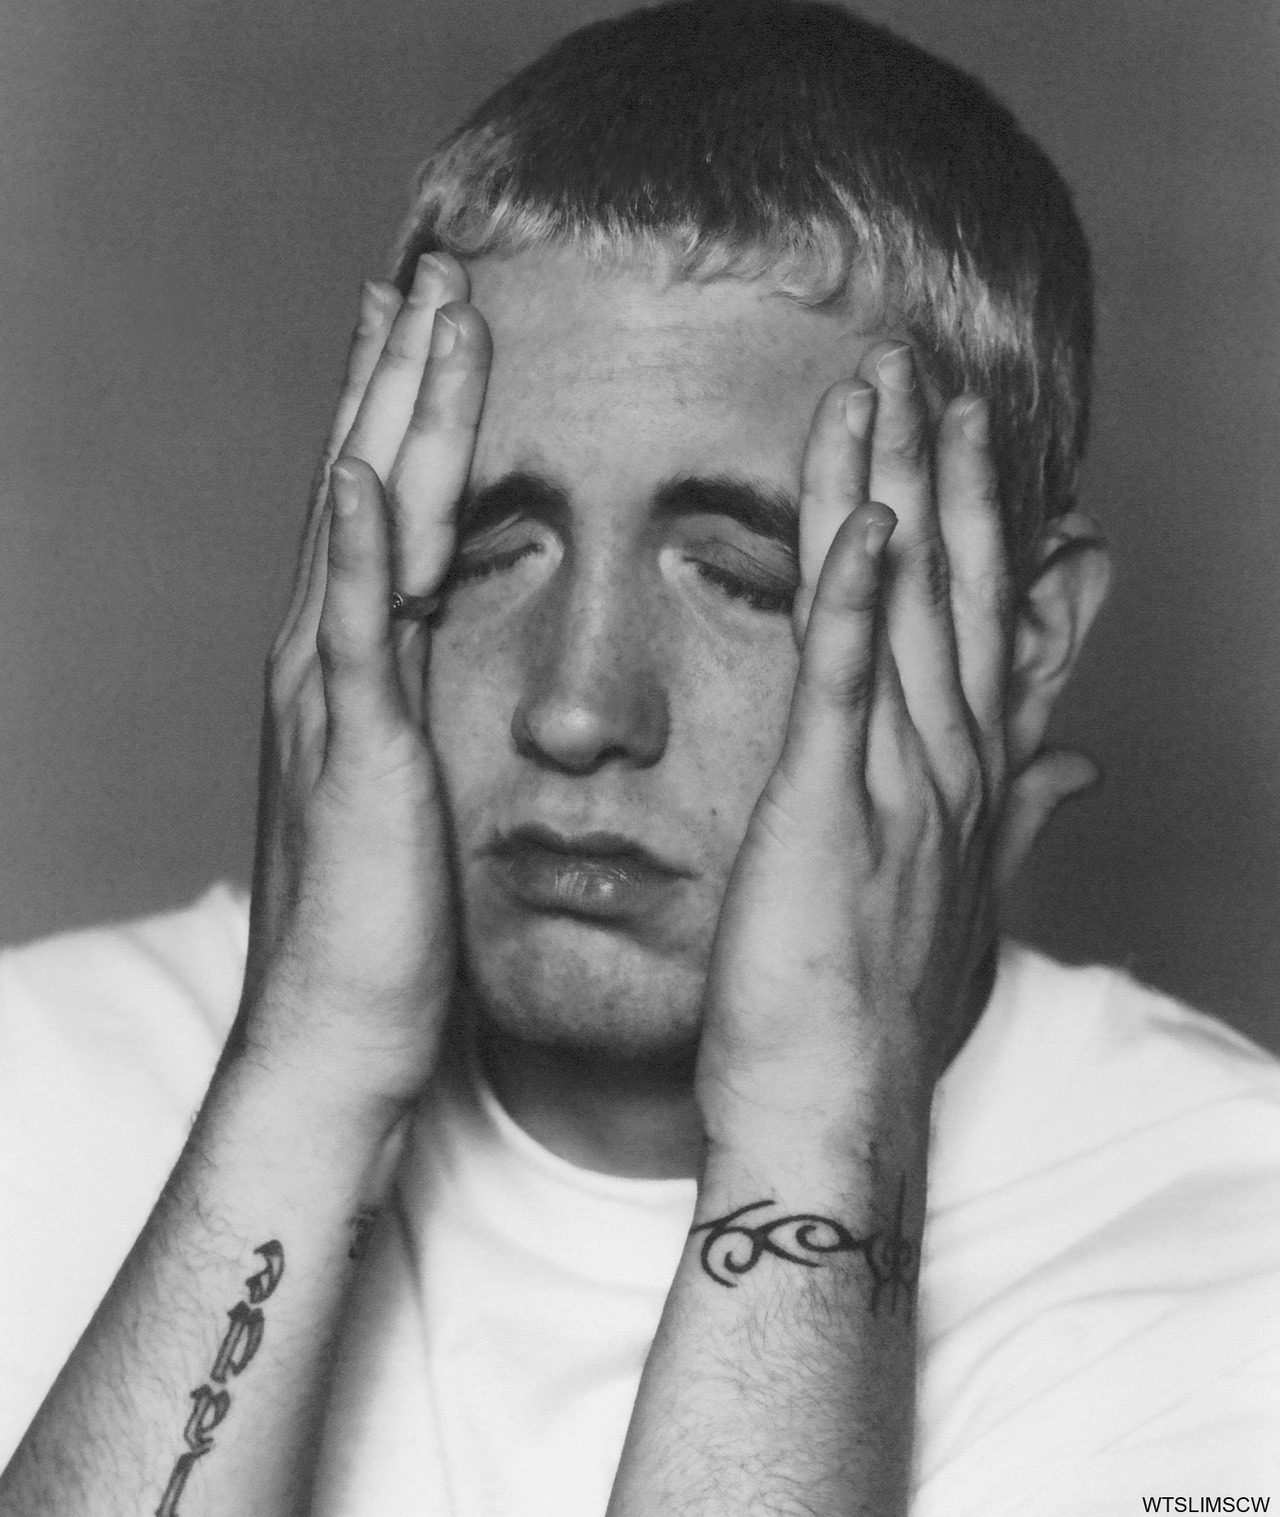 Eminem photo 56 of 142 pics, wallpaper - photo #561006 - ThePlace2